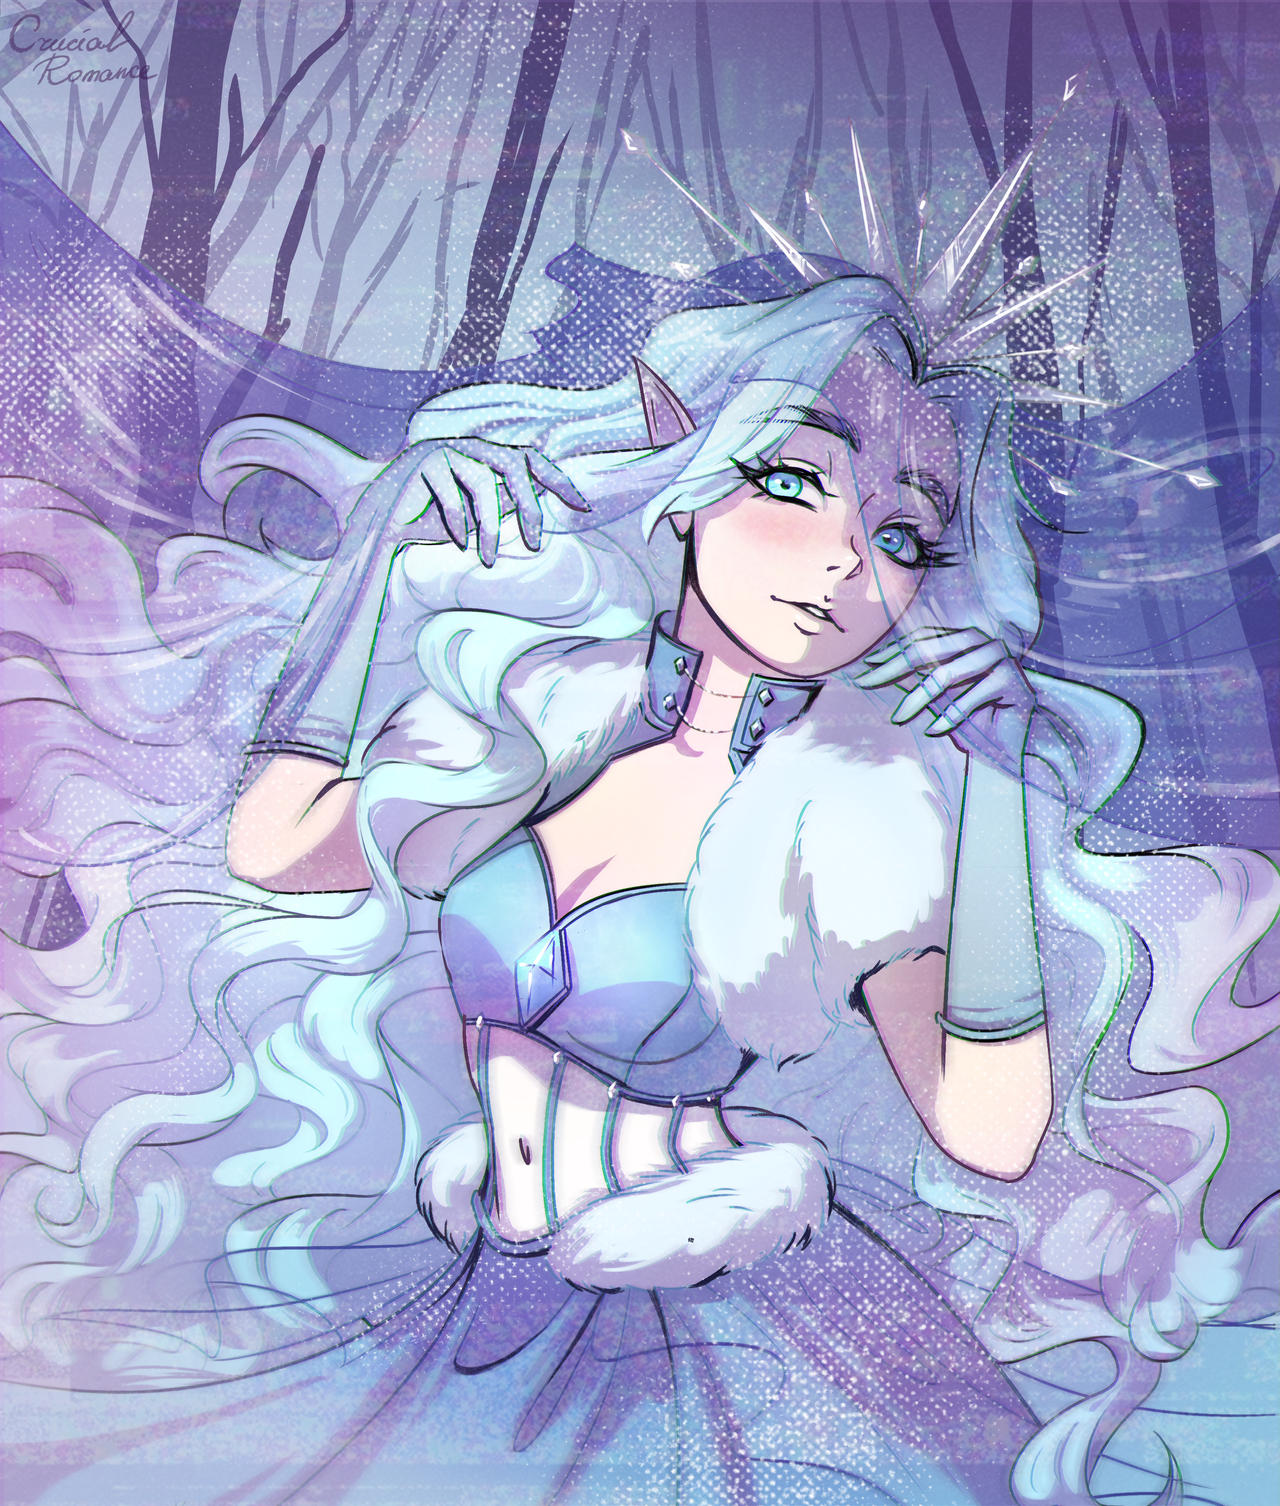 Artemisia the Snow Queen by Hideyo on DeviantArt